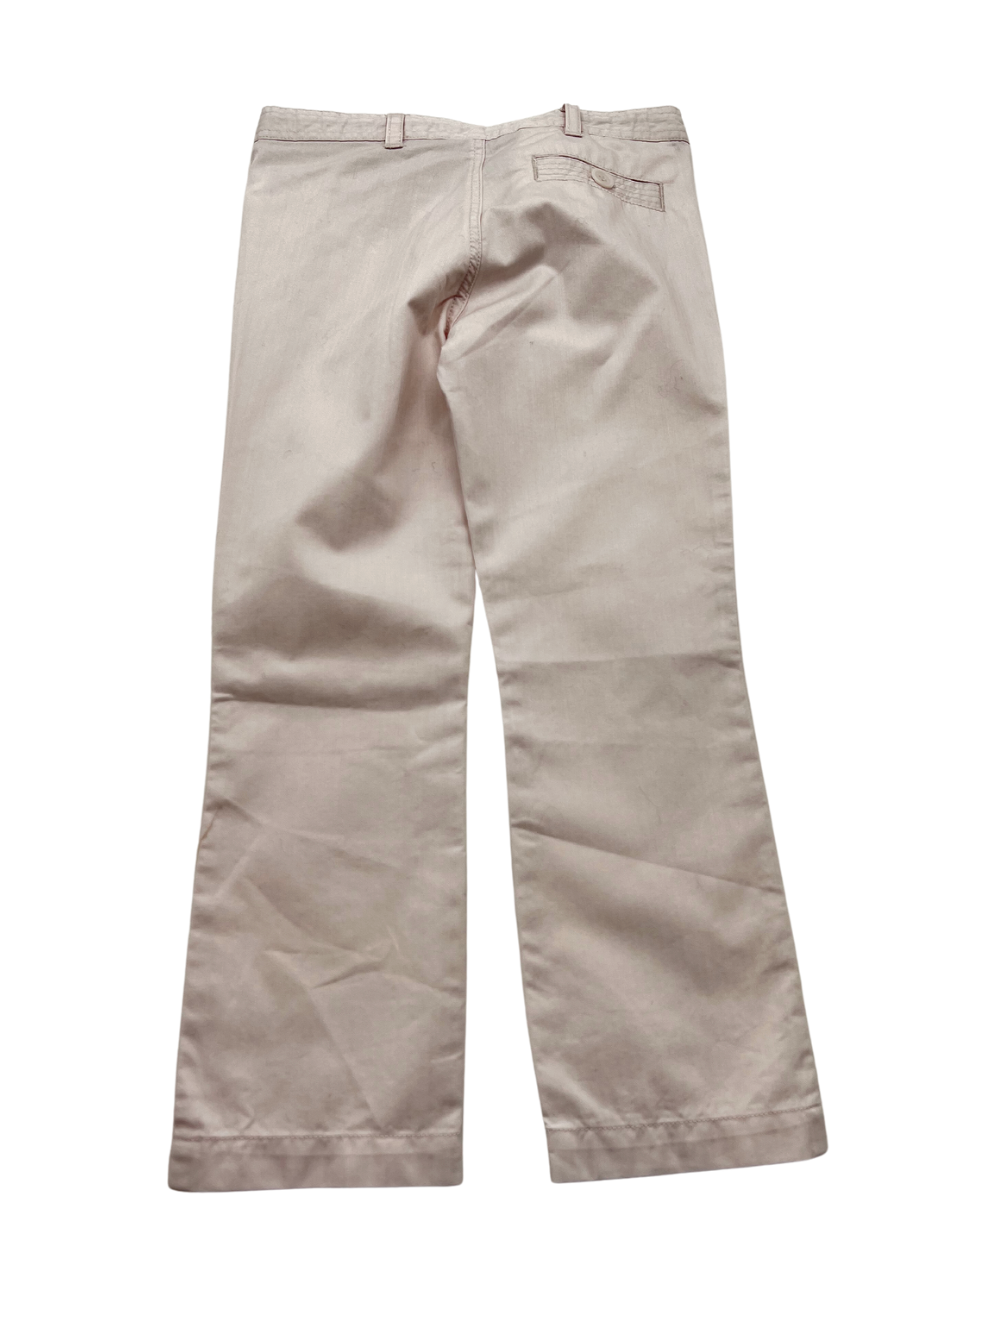 BONPOINT - Pantalon rose pâle - 4 ans